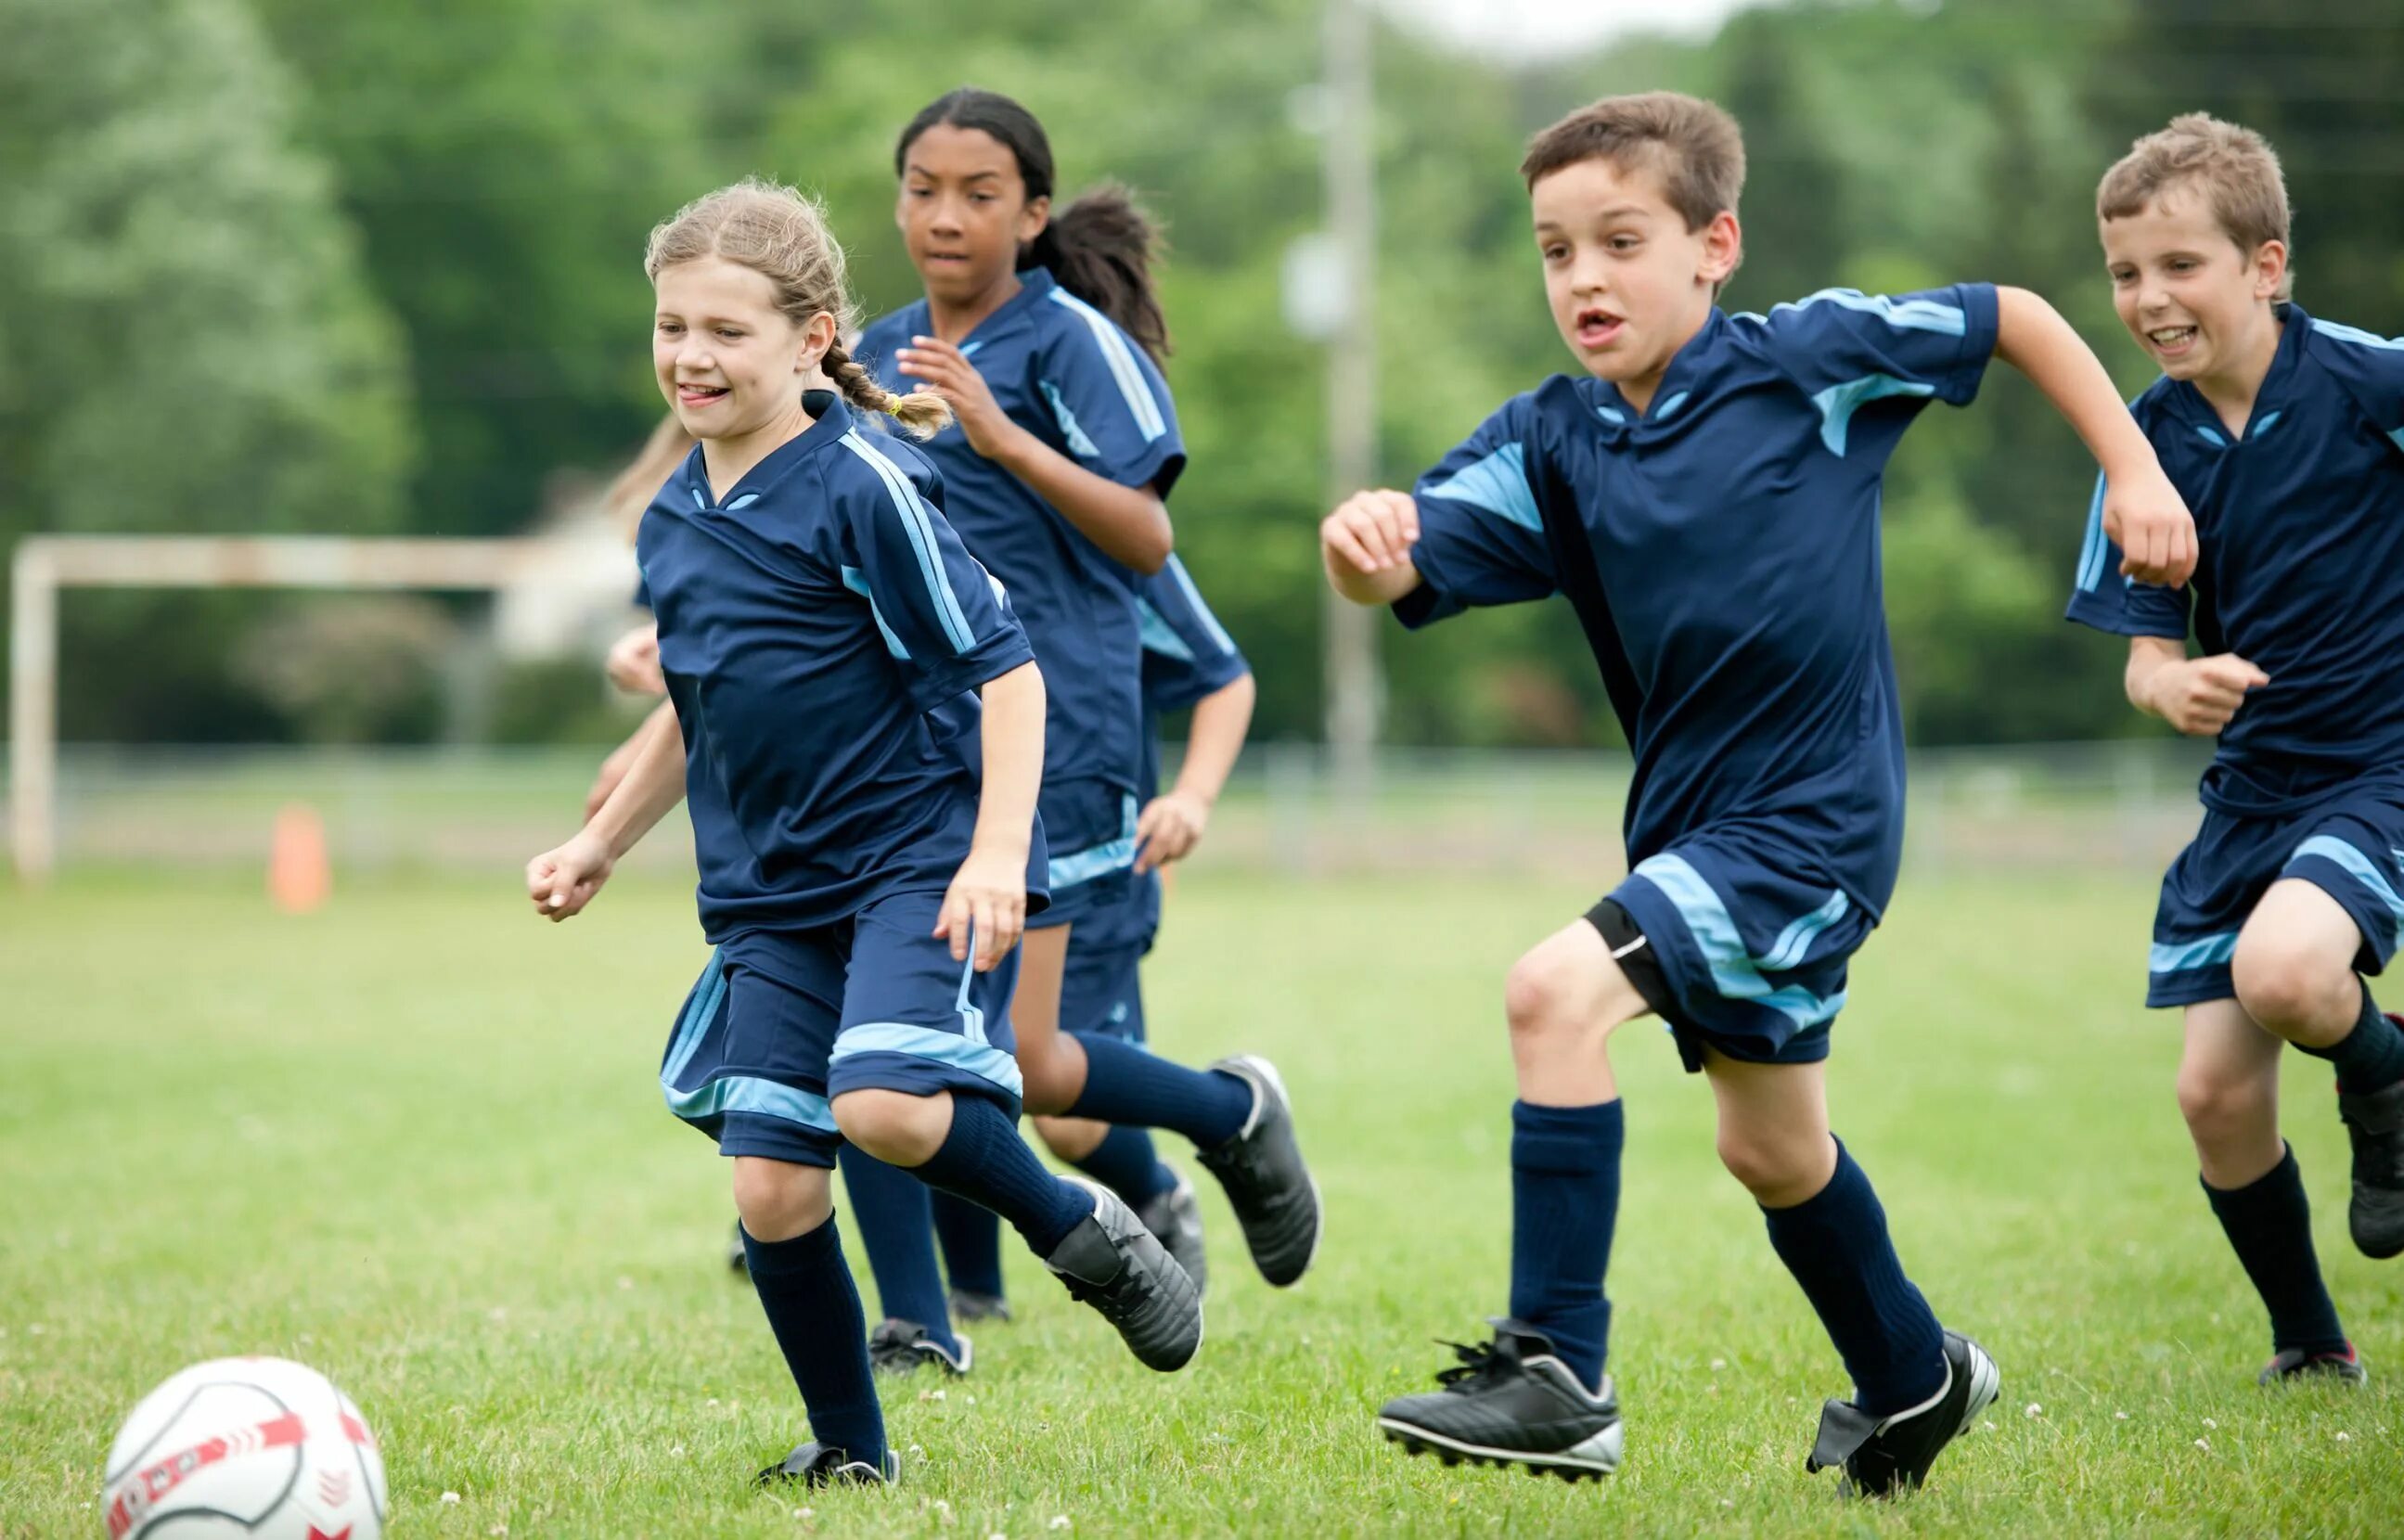 I can playing football. Футбол дети. Дети играющие в футбол. Спорт футбол дети. Футбол для школьников.